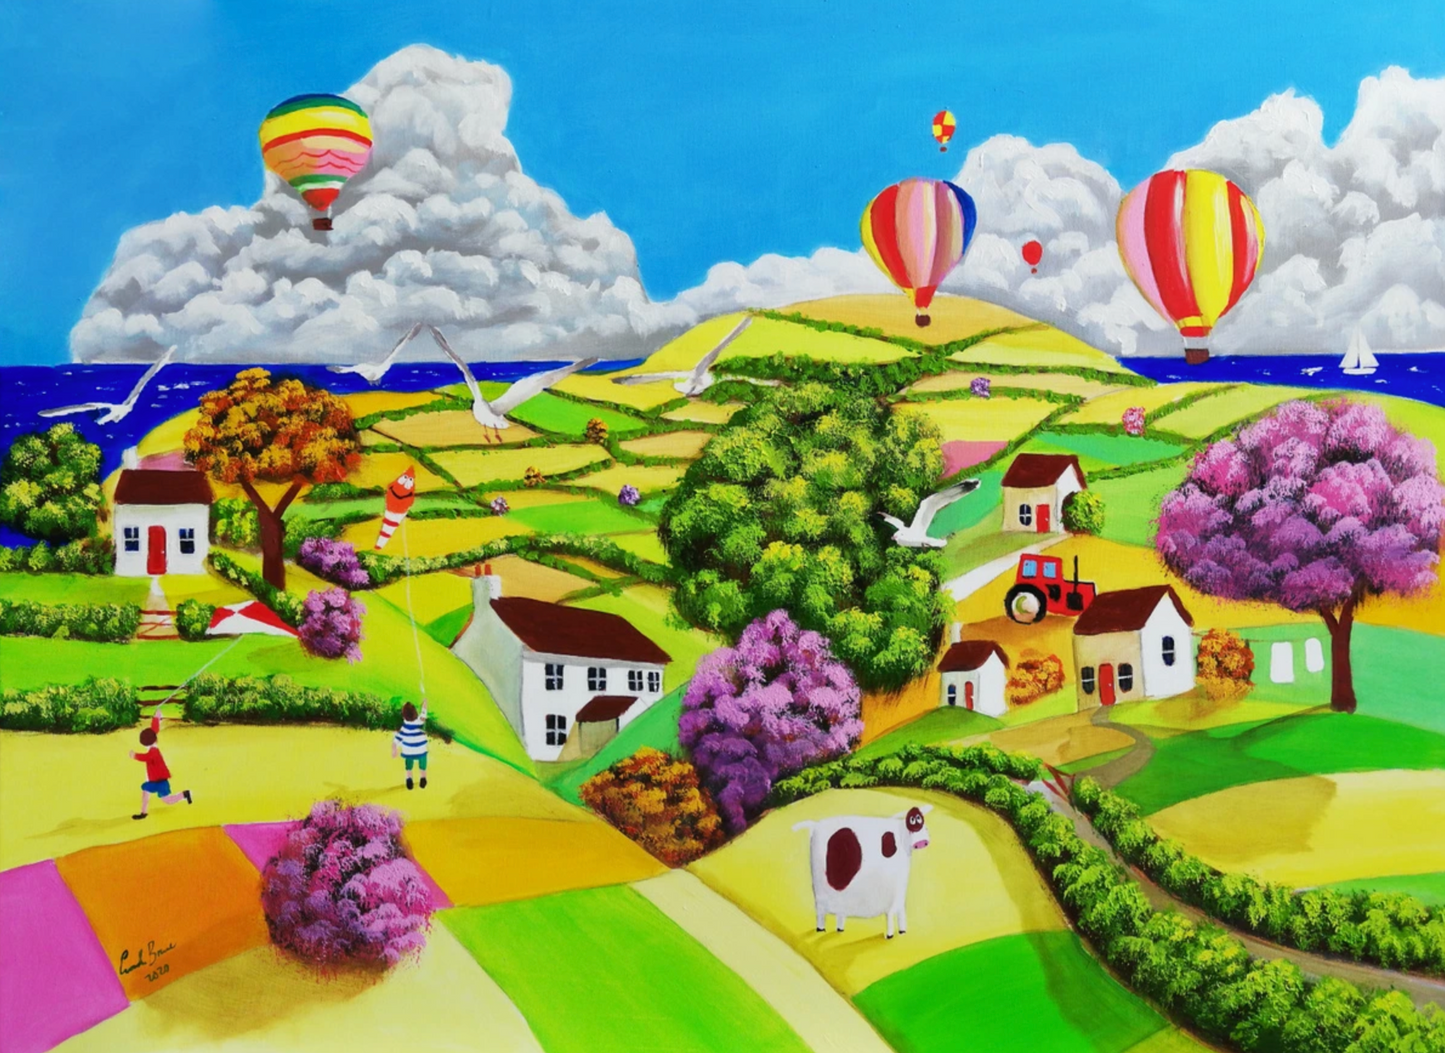 Flying kites (2020) folk art painting